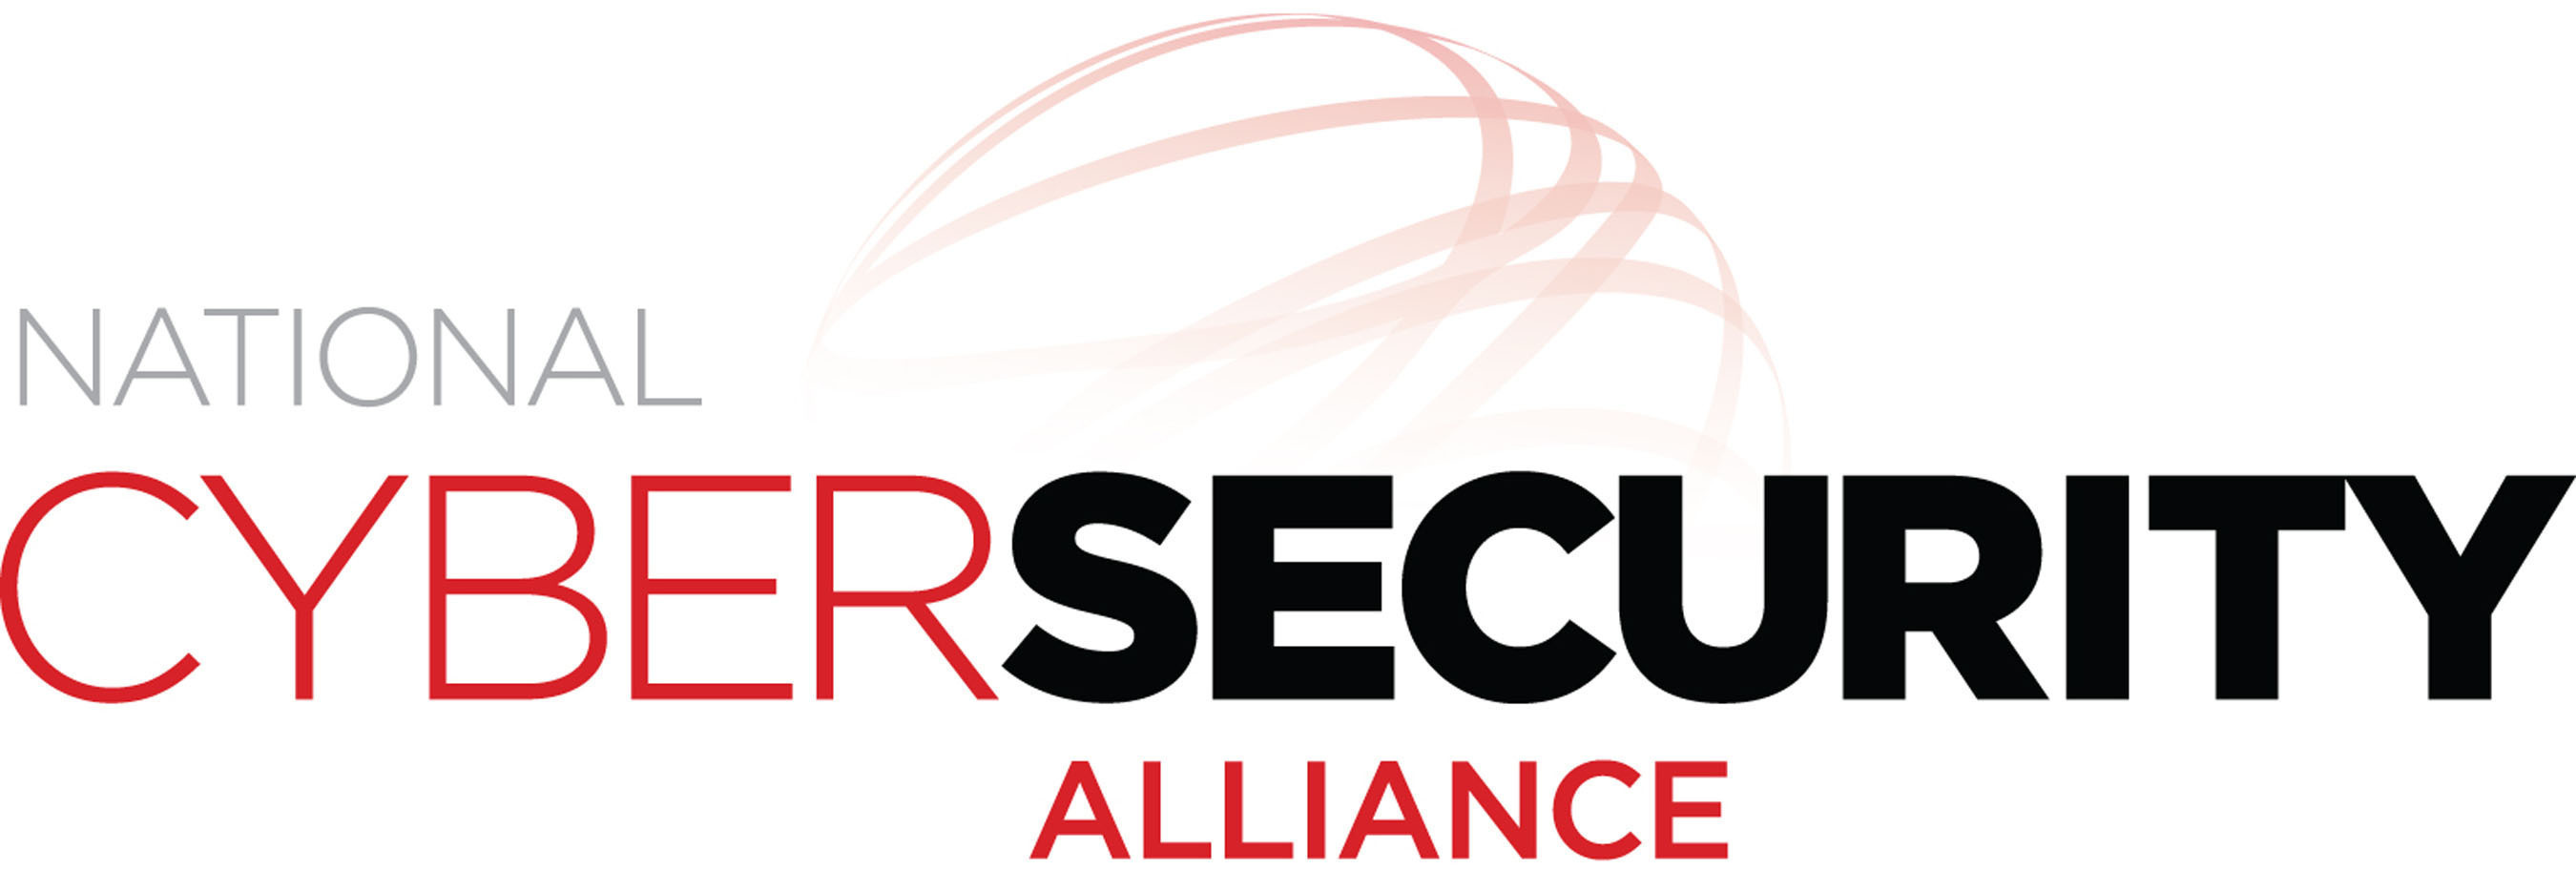 National Cyber Security Alliance. (PRNewsFoto/National Cyber Security Alliance) (PRNewsFoto/NATIONAL CYBER SECURITY ALLIANCE)